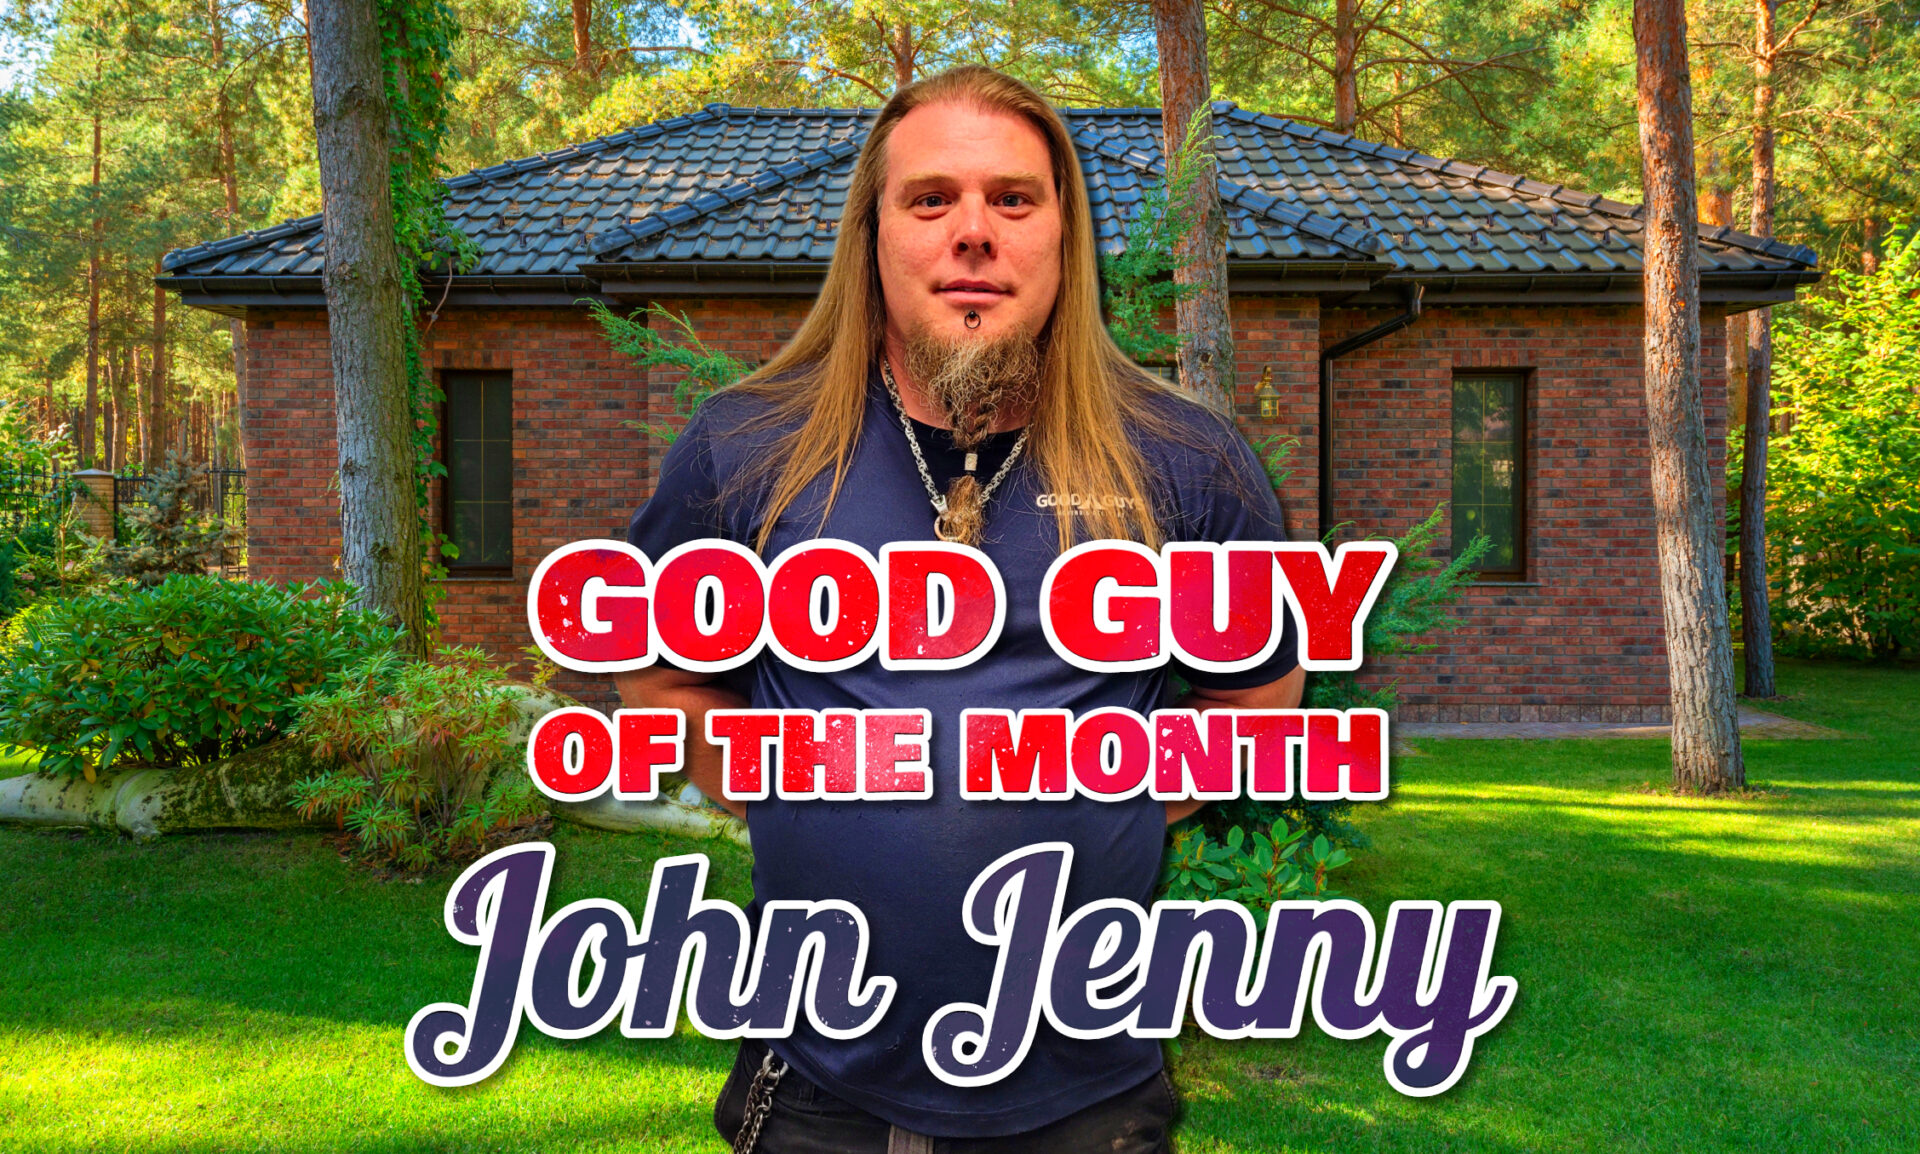 Good Guy of the Month: John Jenny